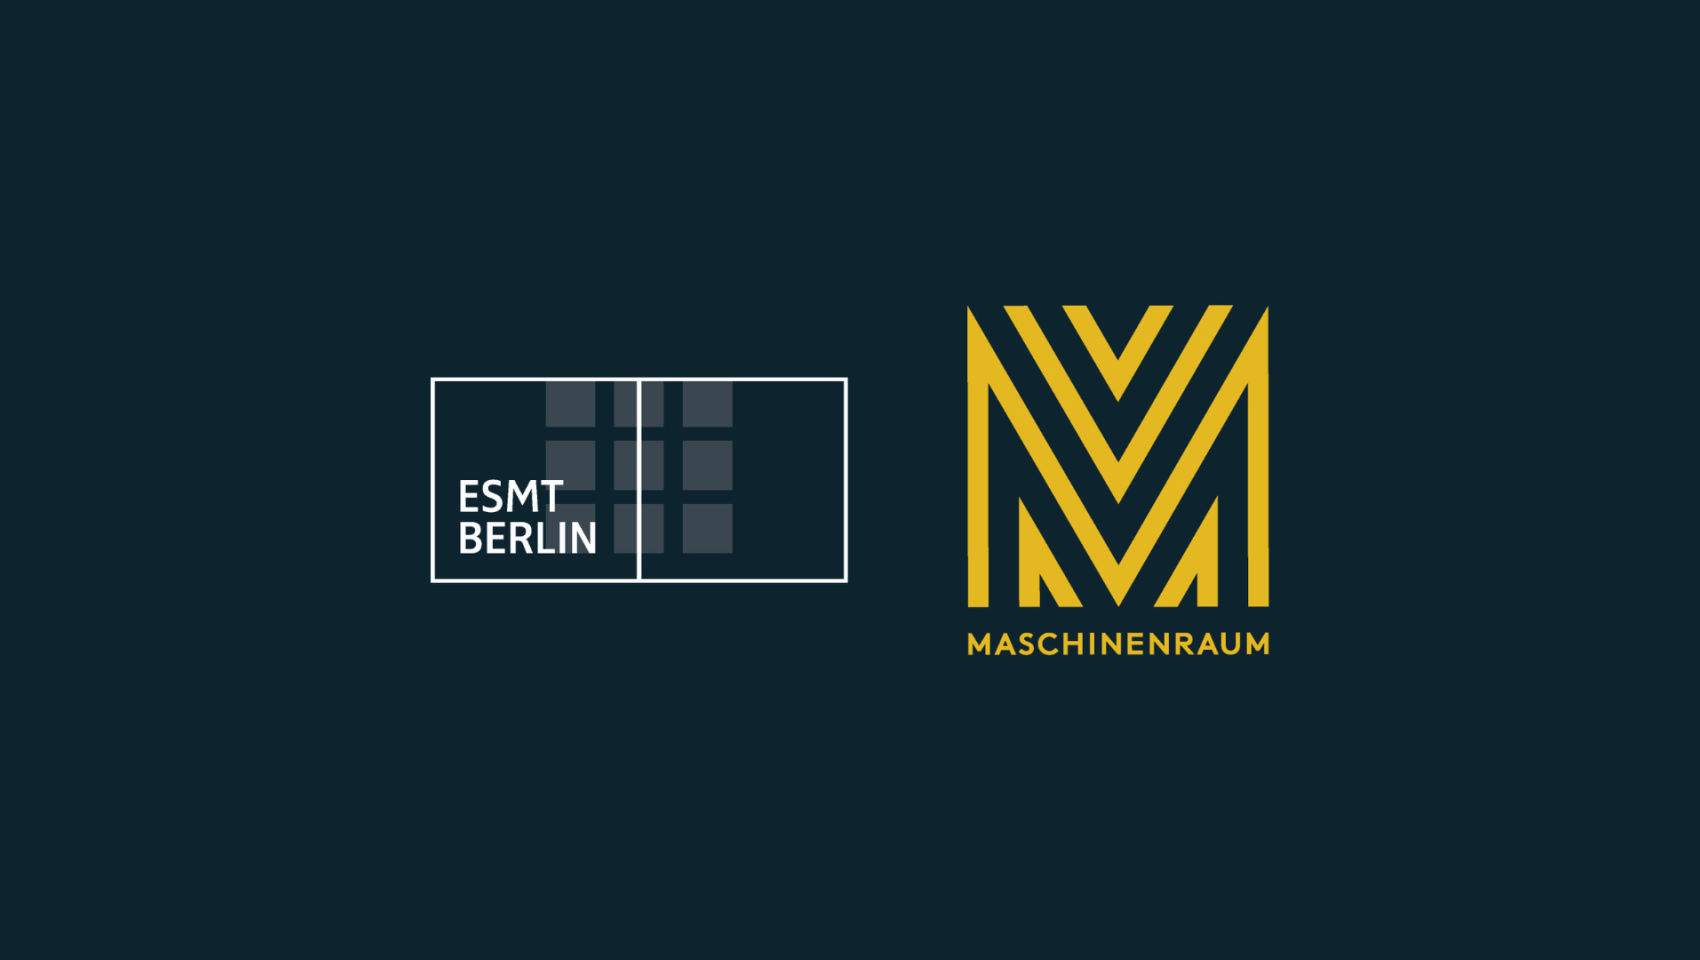 Partnership of ESMT Berlin and Maschinenraum